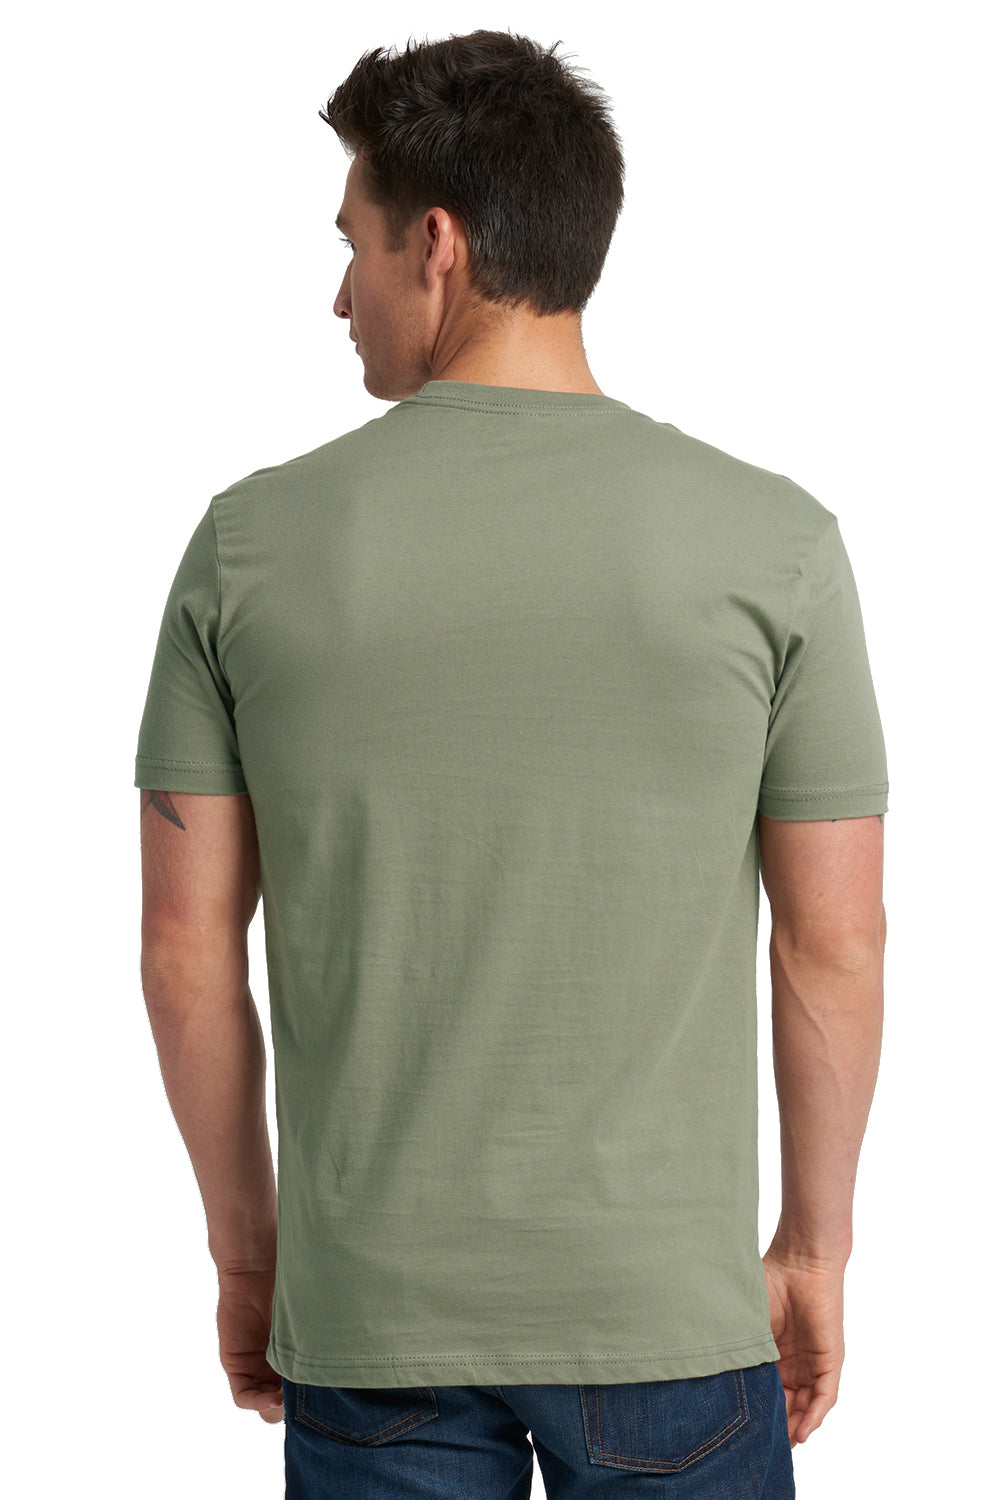 Next Level 3600 Mens Fine Jersey Short Sleeve Crewneck T-Shirt Light Olive Green Back